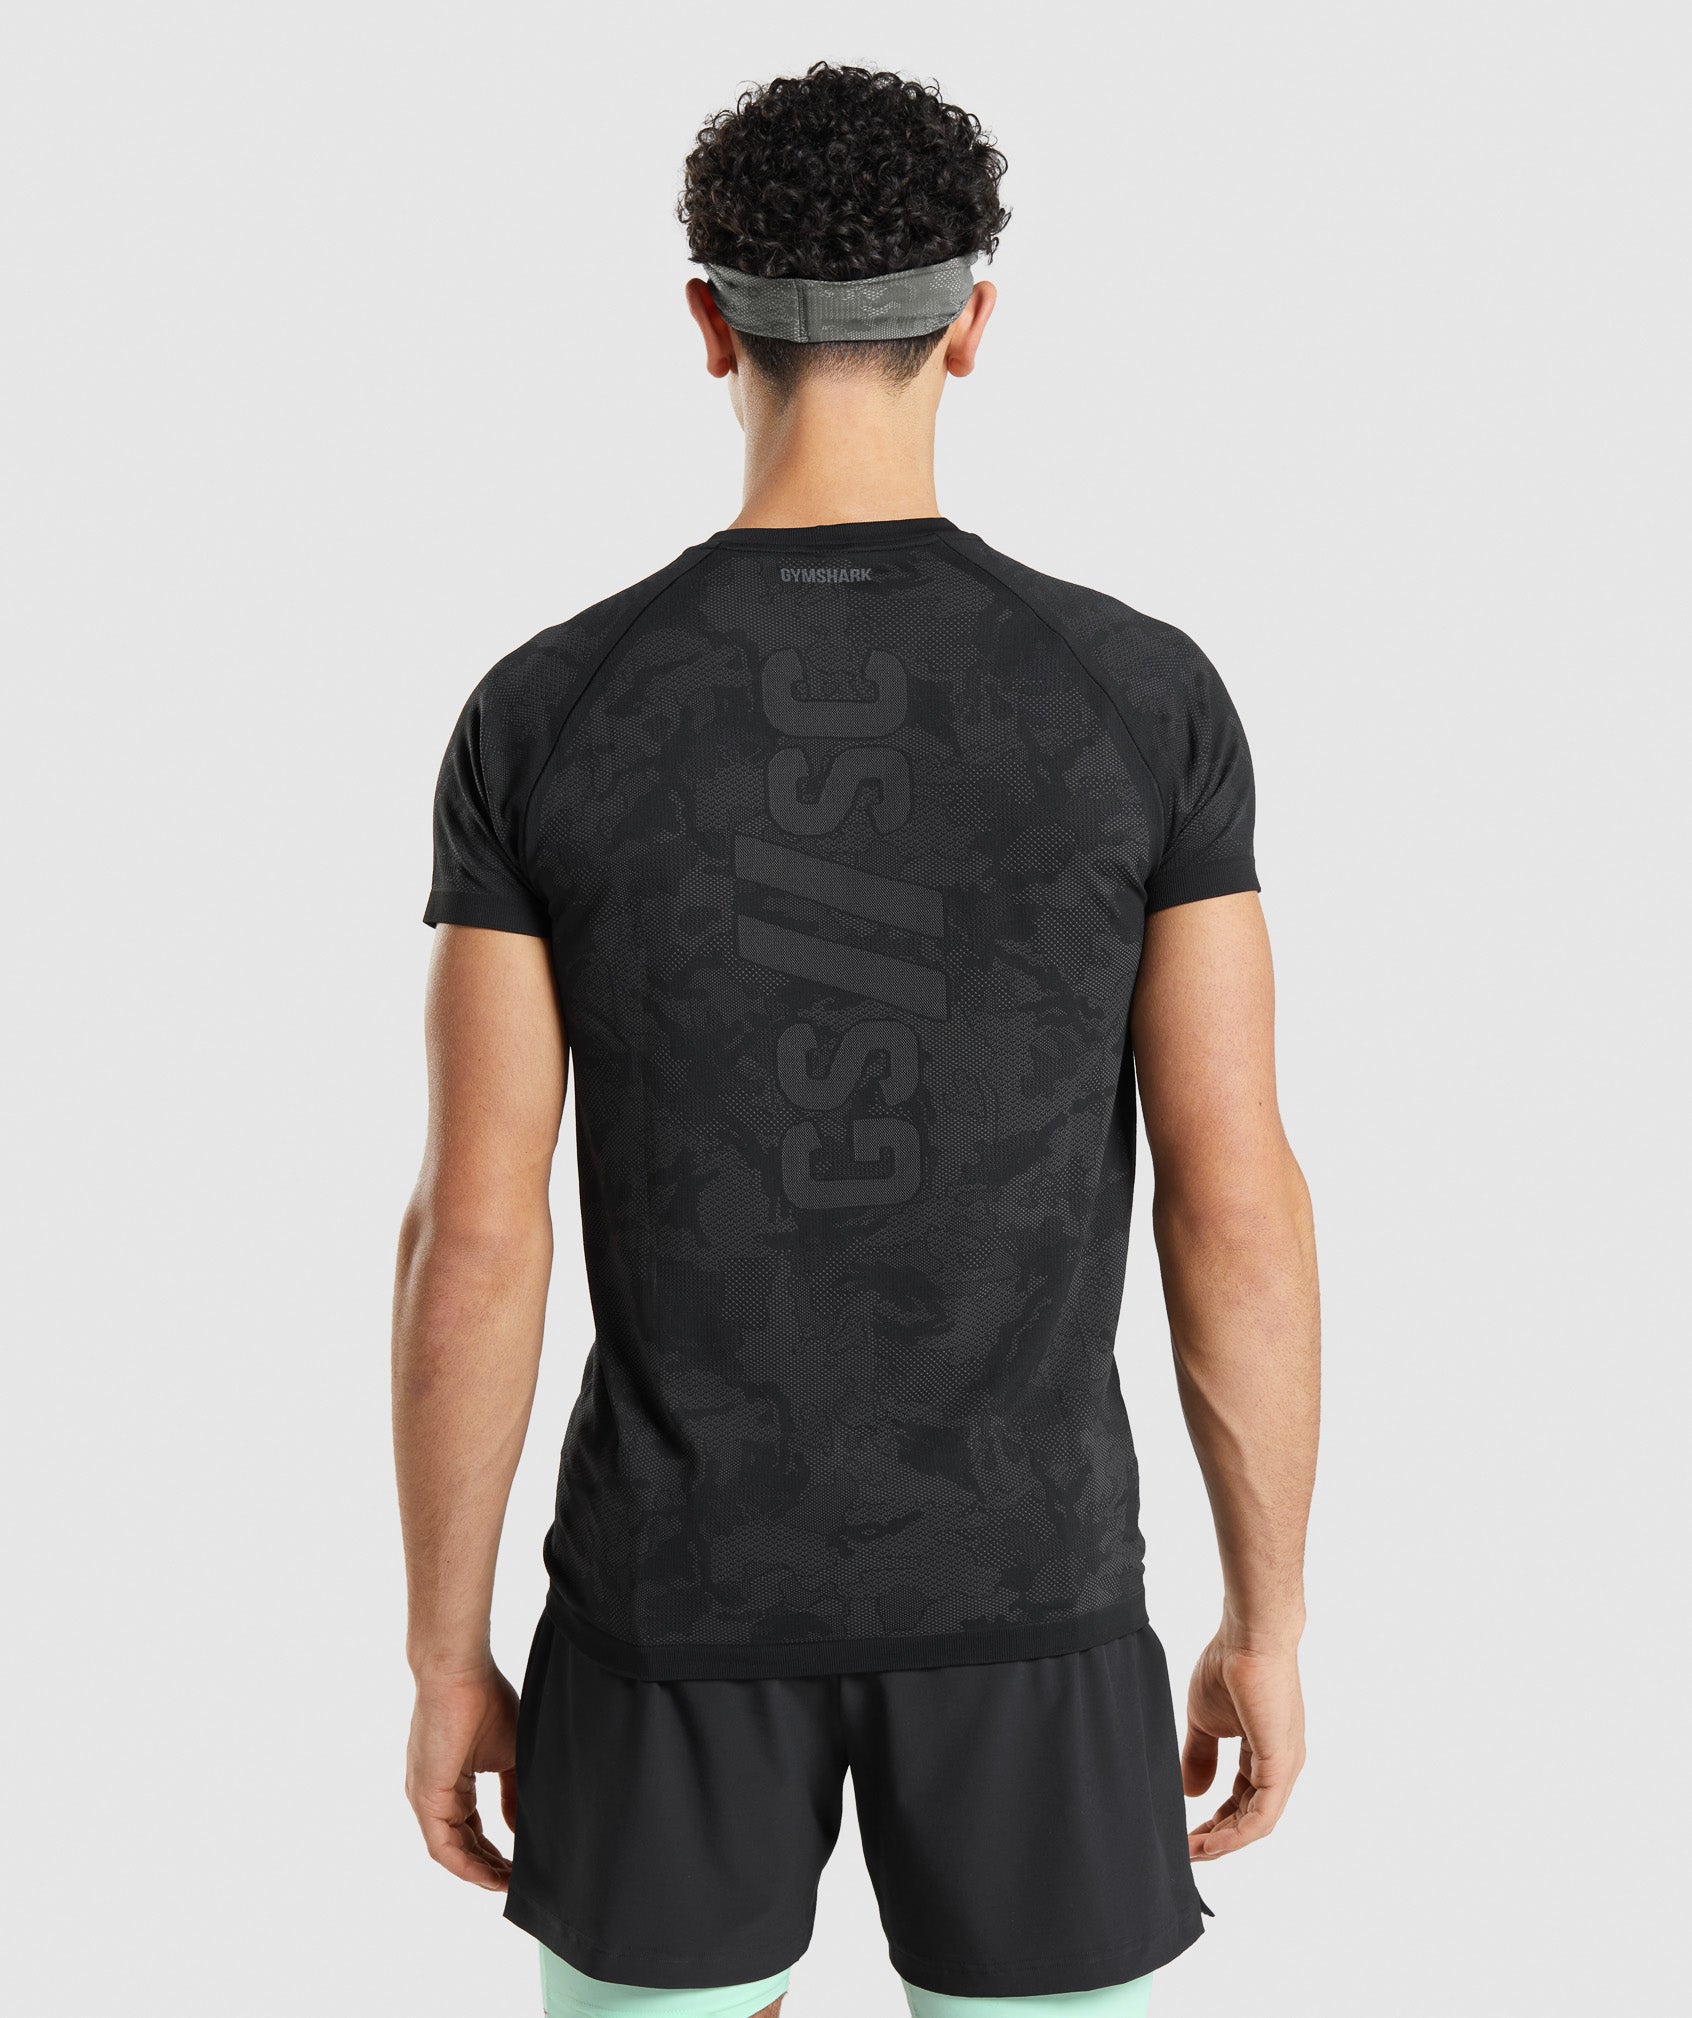 Gymshark//Steve Cook Seamless T-Shirt in Black/Graphite Grey